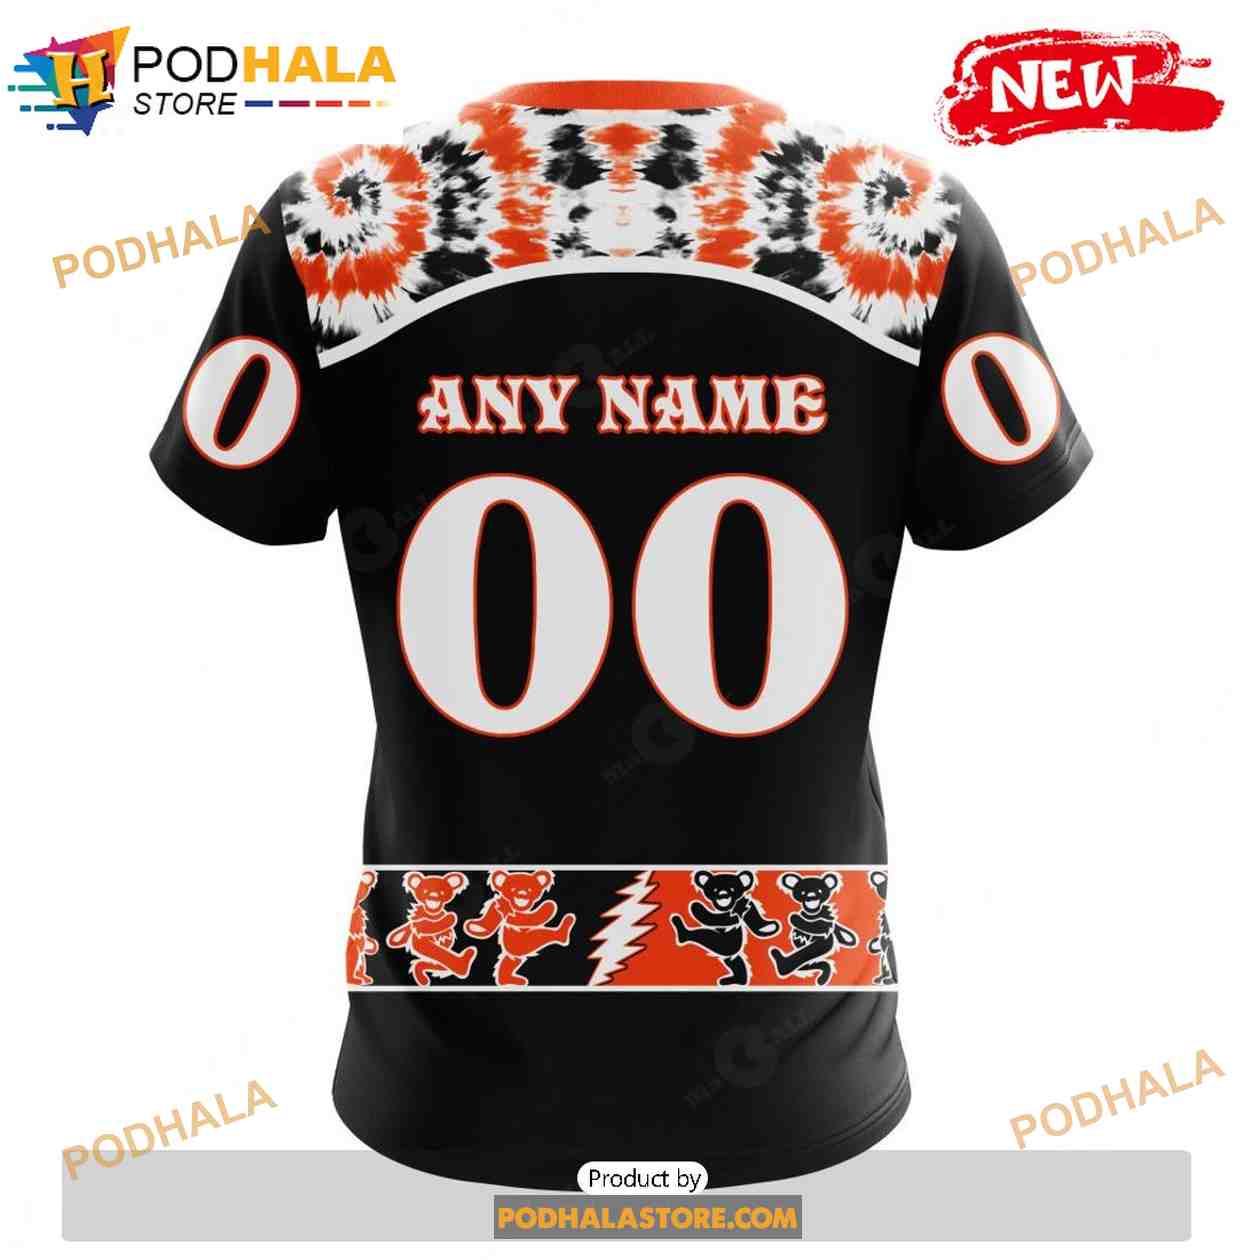 Grateful Dead Philadelphia Flyers 3D Hockey Jersey Personalized Name Number